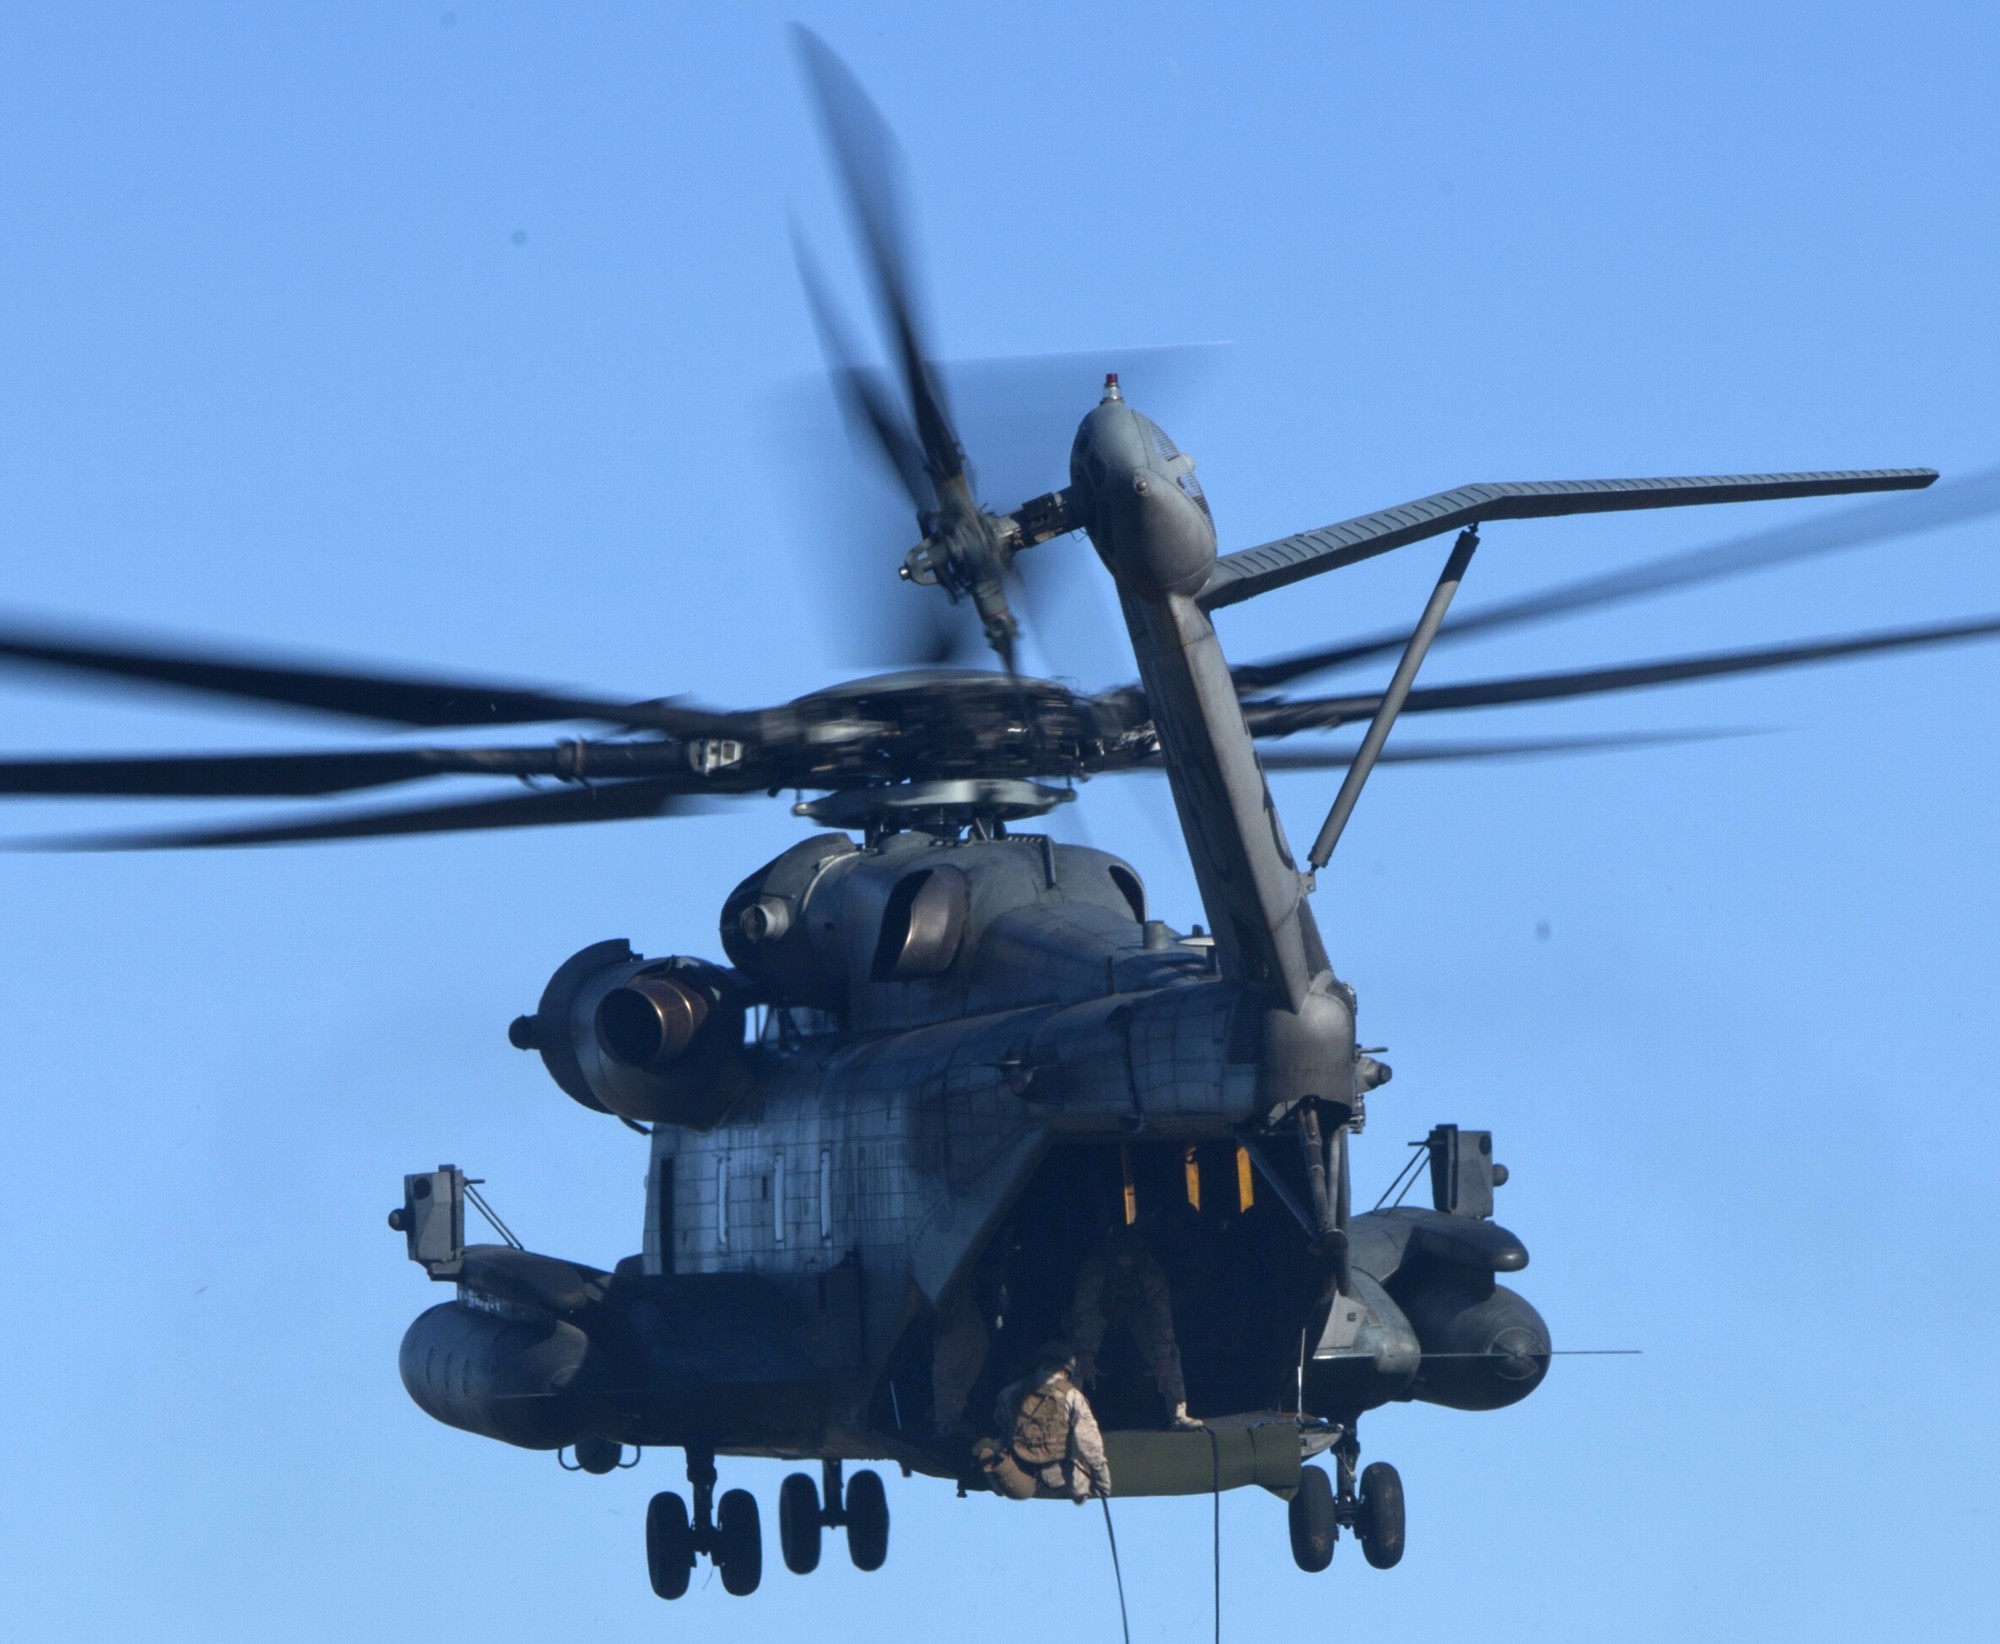 hmh-366 hammerheads marine heavy helicopter squadron usmc sikorsky ch-53e super stallion 51